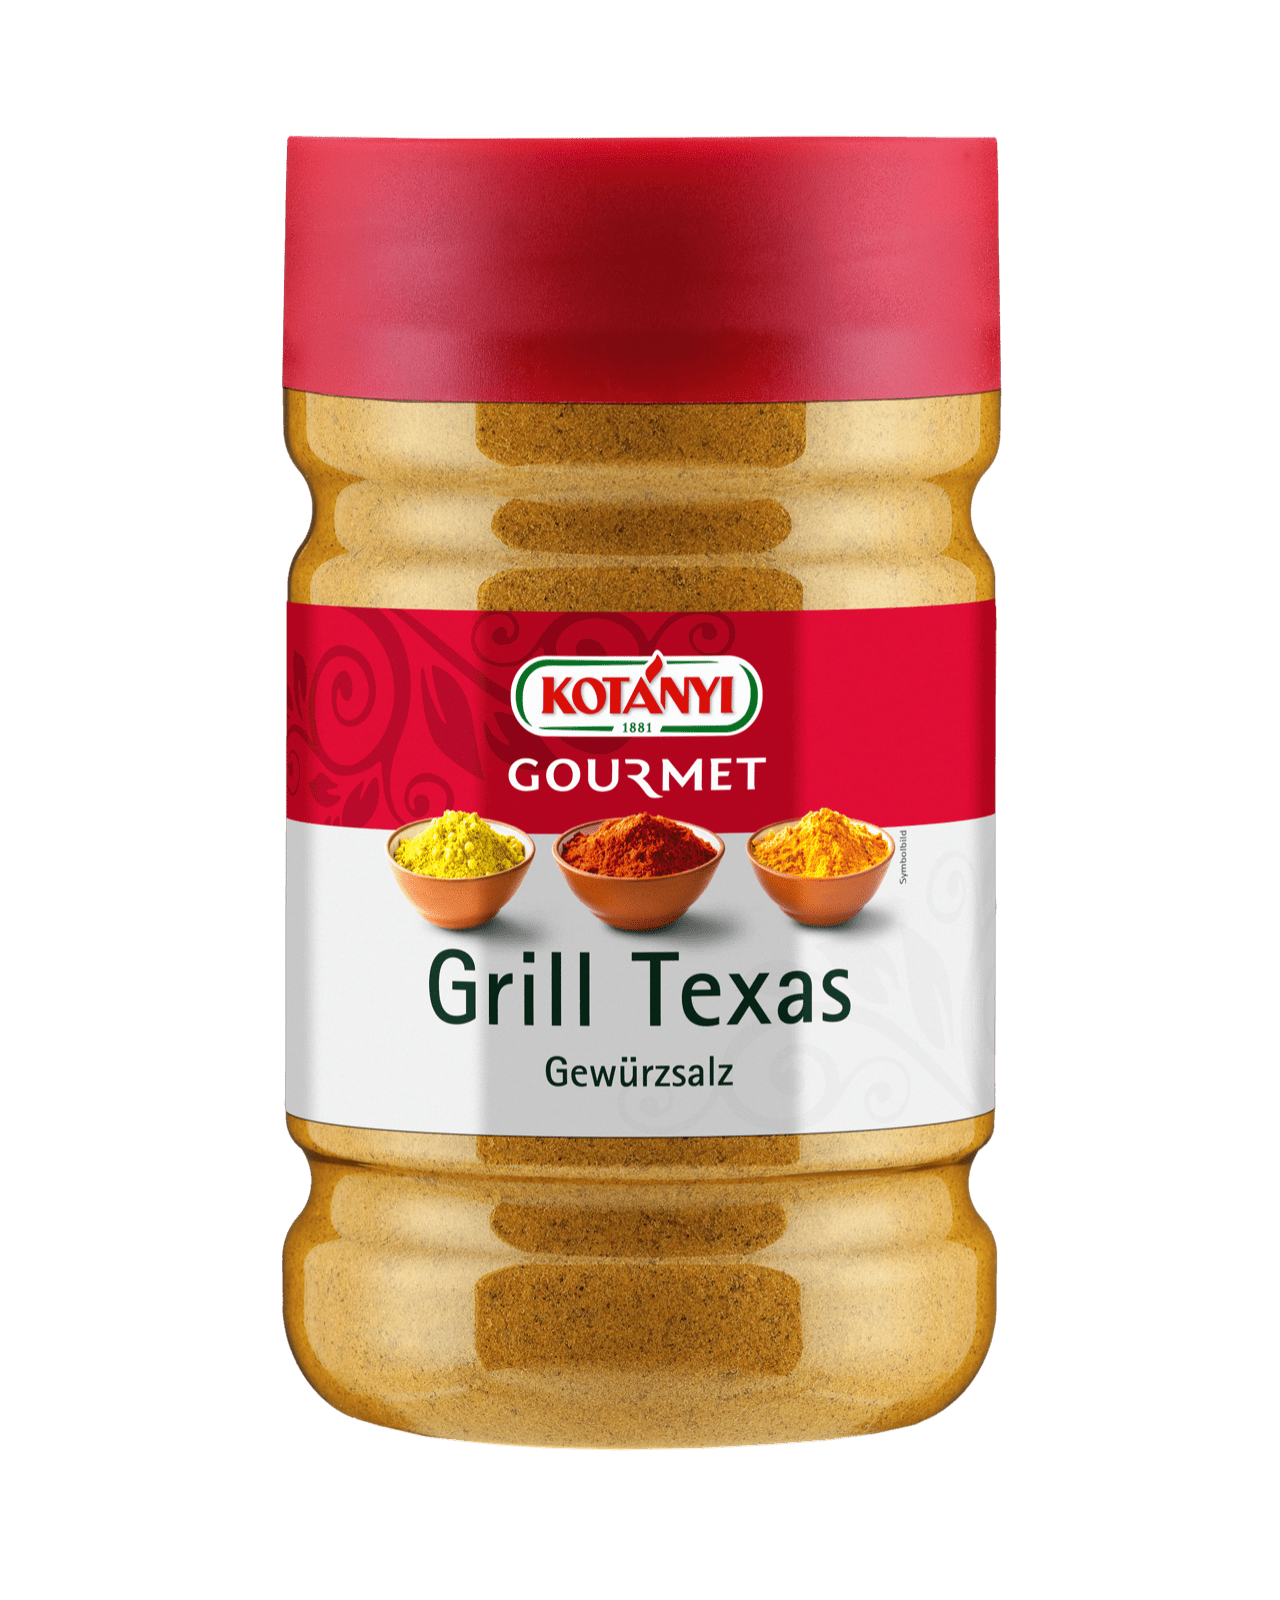 Kotanyi Gourmet Grill Texas Gewürzsalz in der 1200ccm Dose